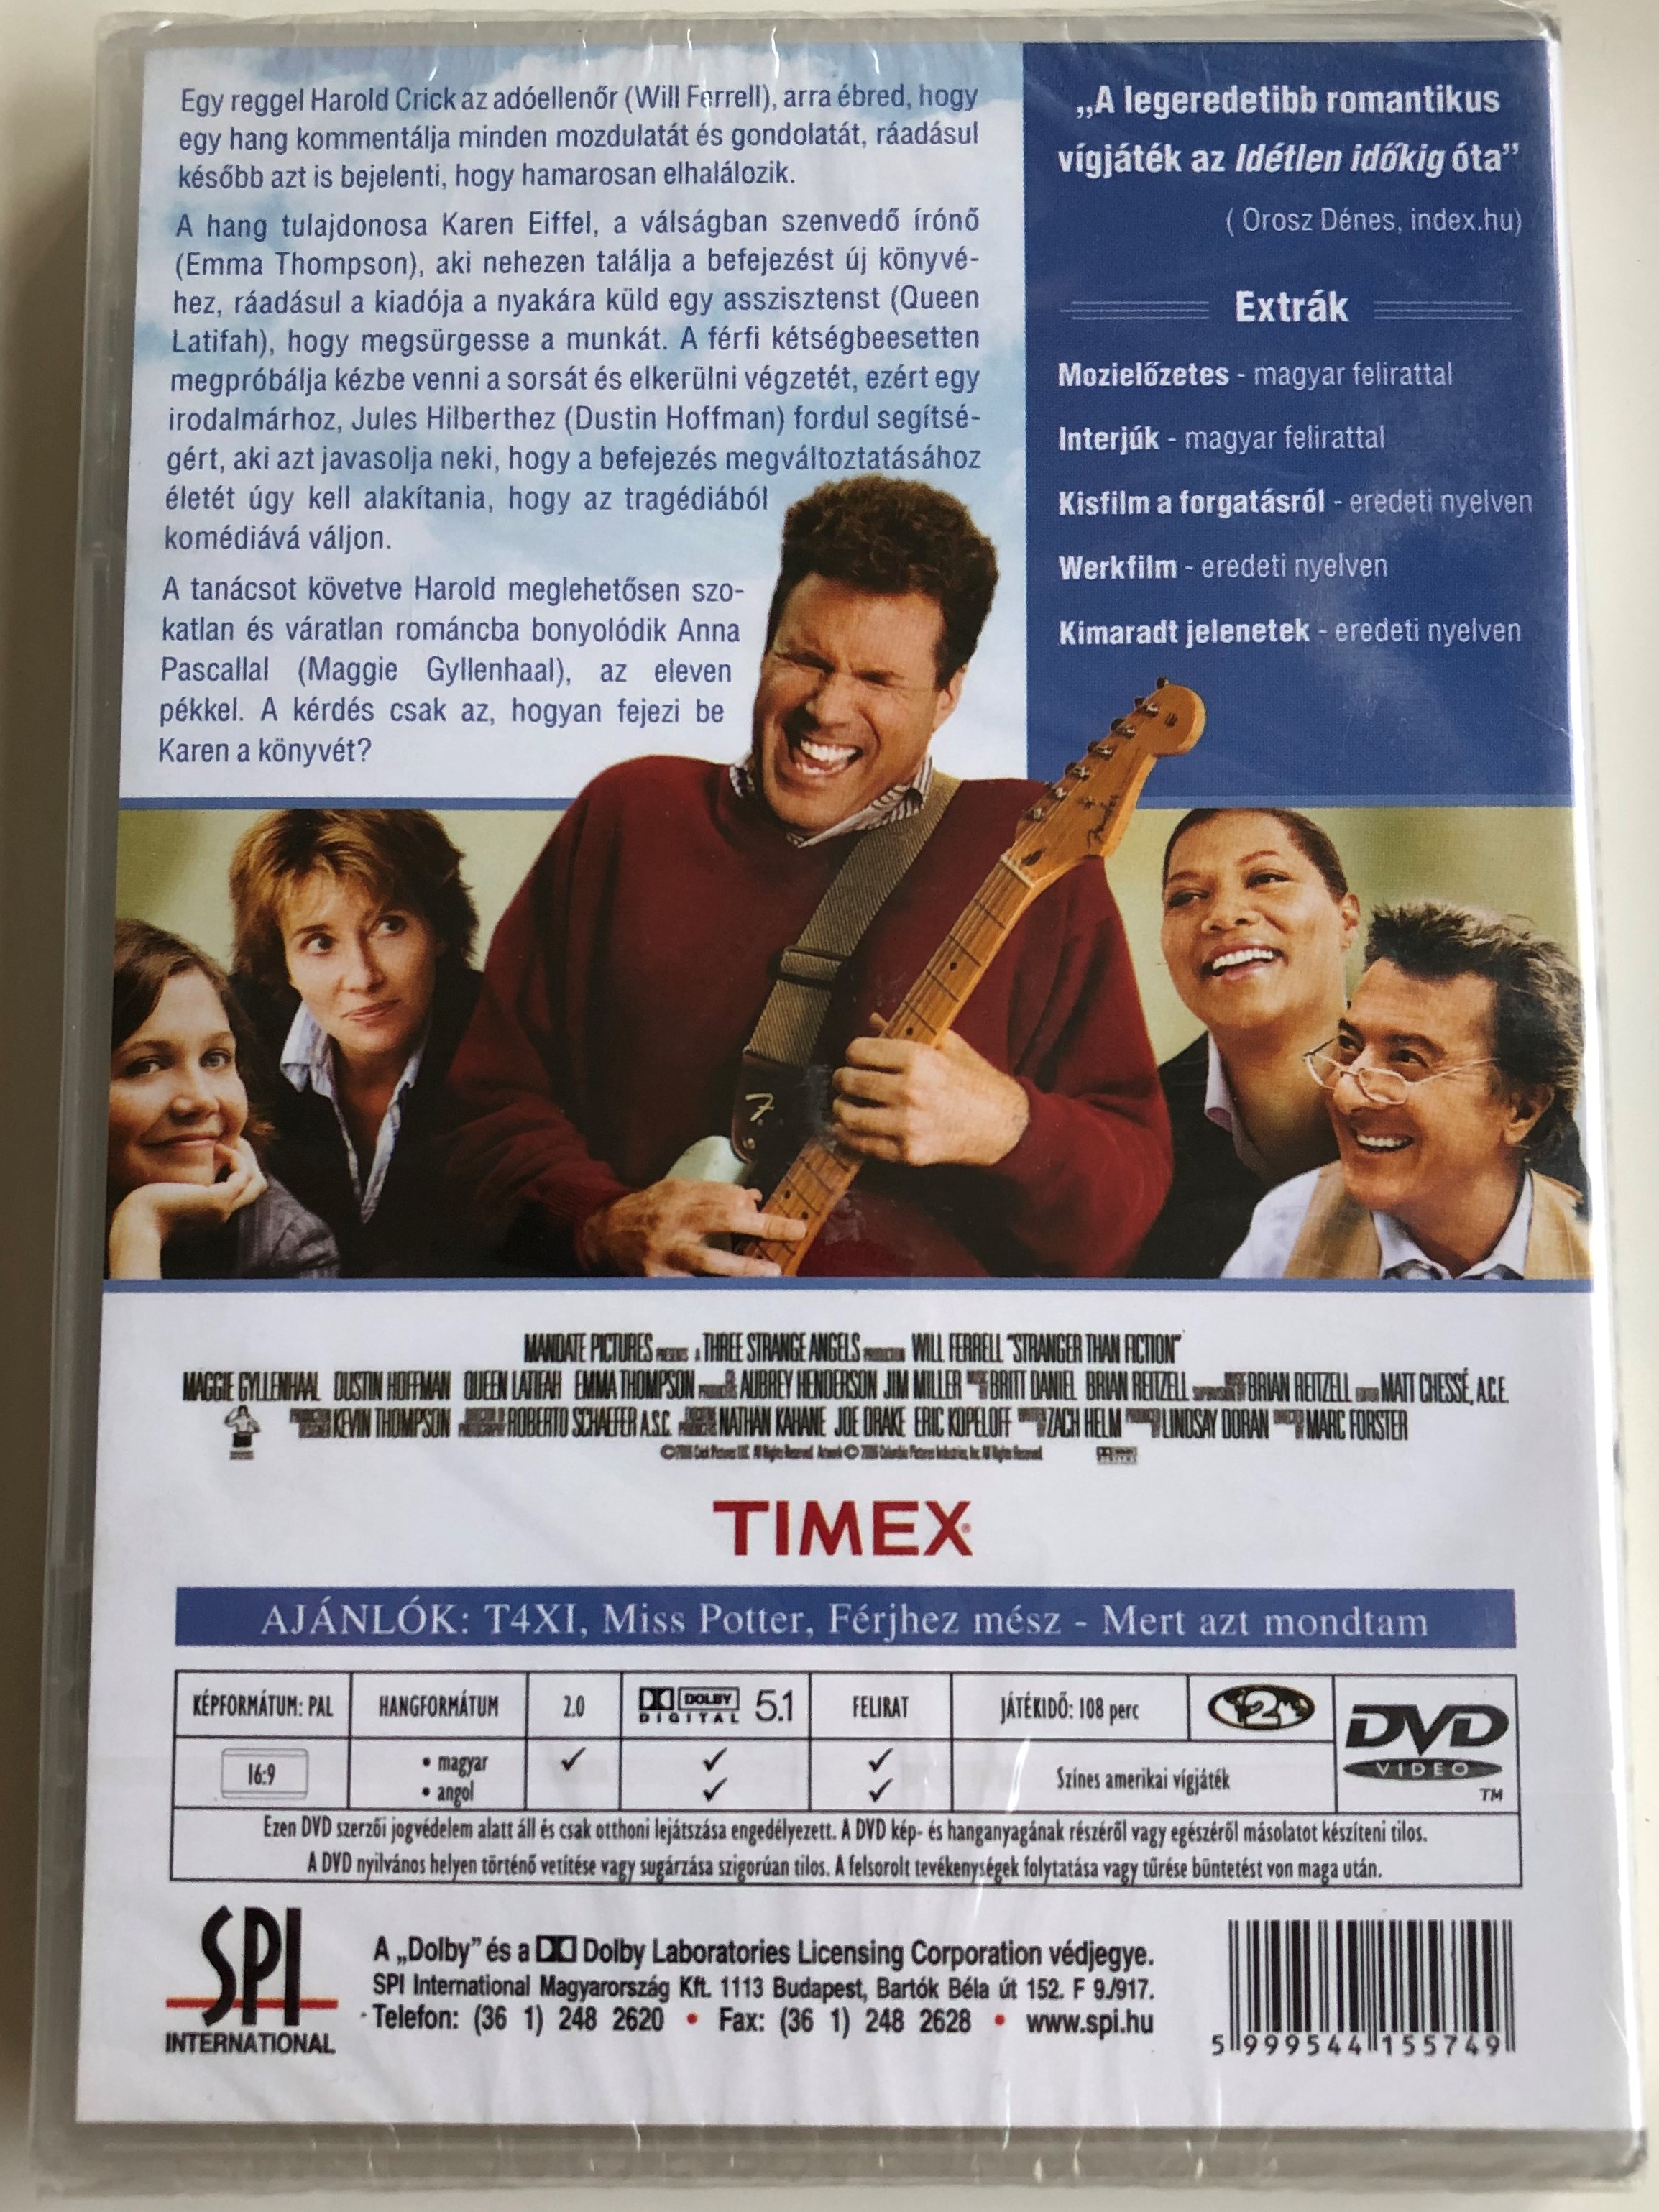 Stranger than Fiction DVD 2006 Felforgatókönyv / Directed by Marc Forster /  Starring: Will Ferrell, Maggie Gyllenhaal, Dustin Hoffman, Queen Latifah -  Bible in My Language